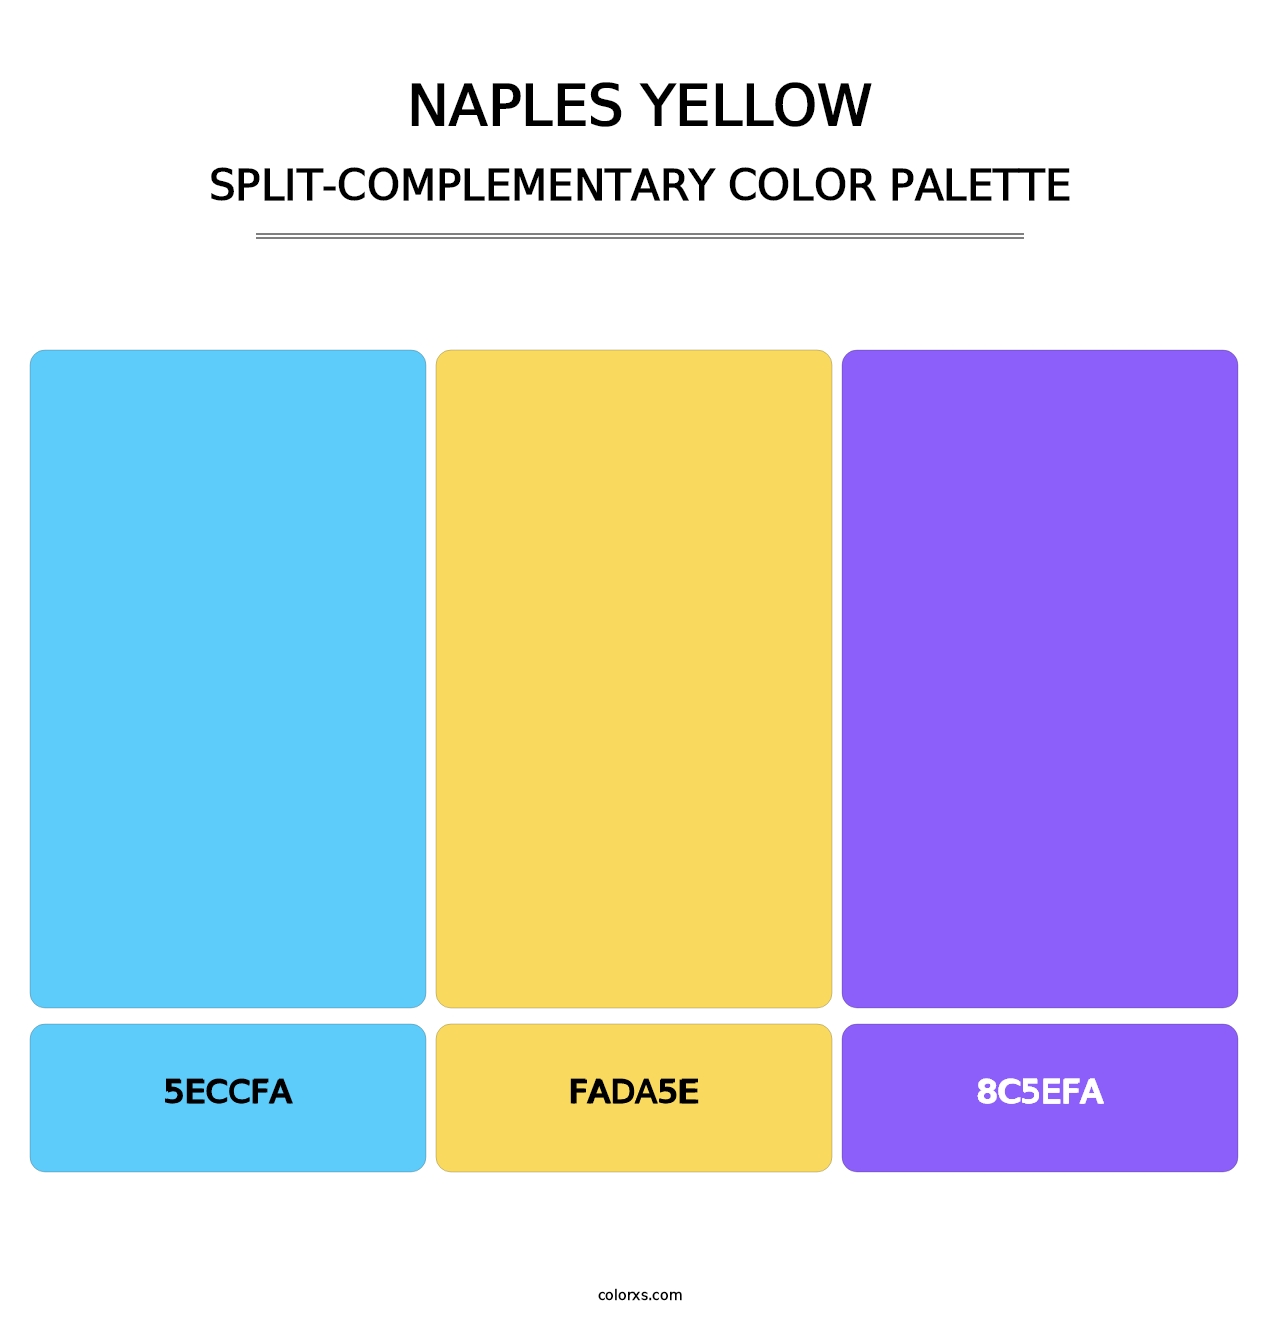 Naples Yellow - Split-Complementary Color Palette